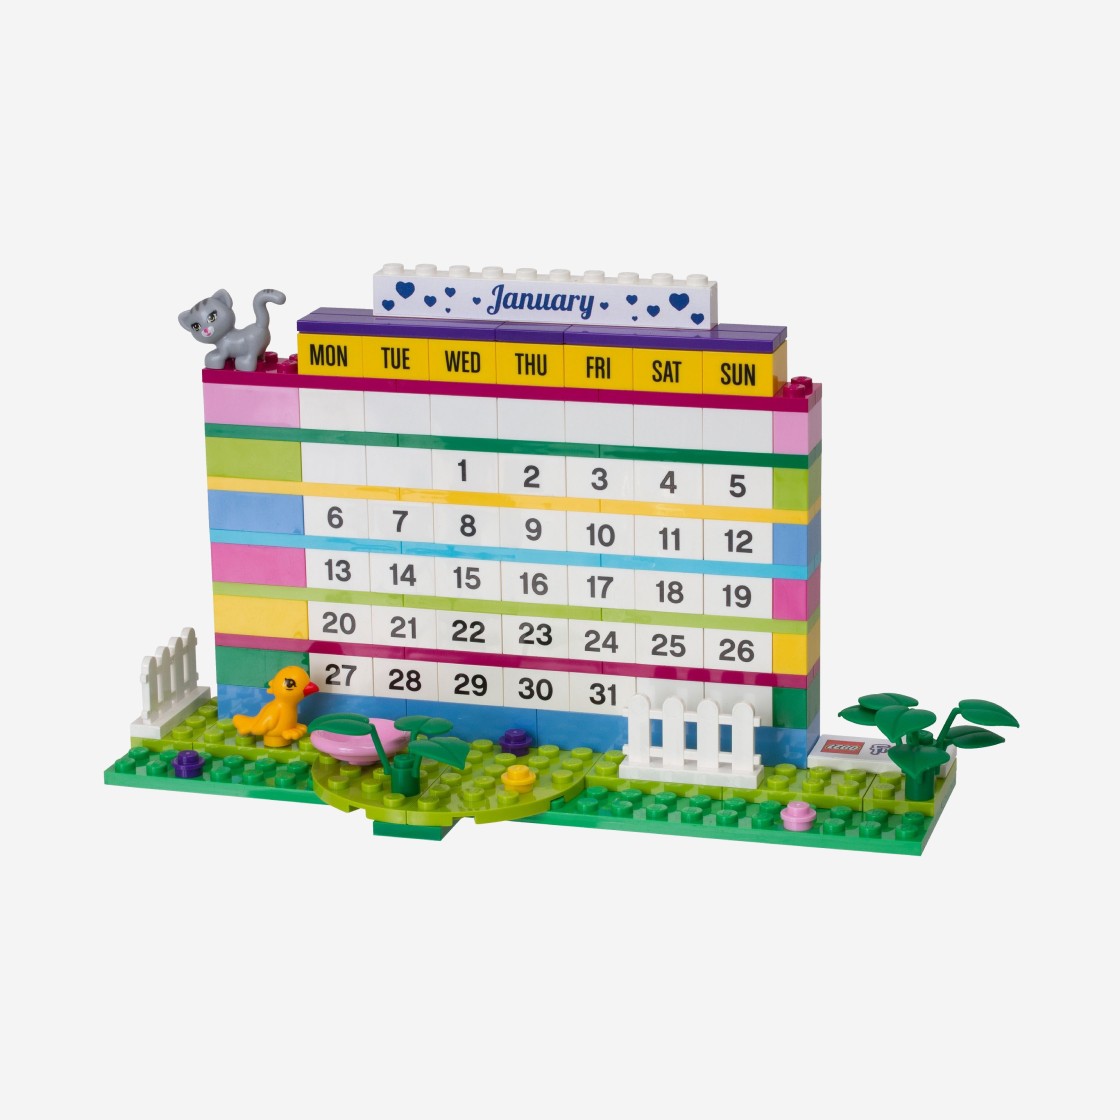 [LEGO] 레고 프렌즈 브릭 캘린더 발매 정보 850581 럭드 (LUCKD)